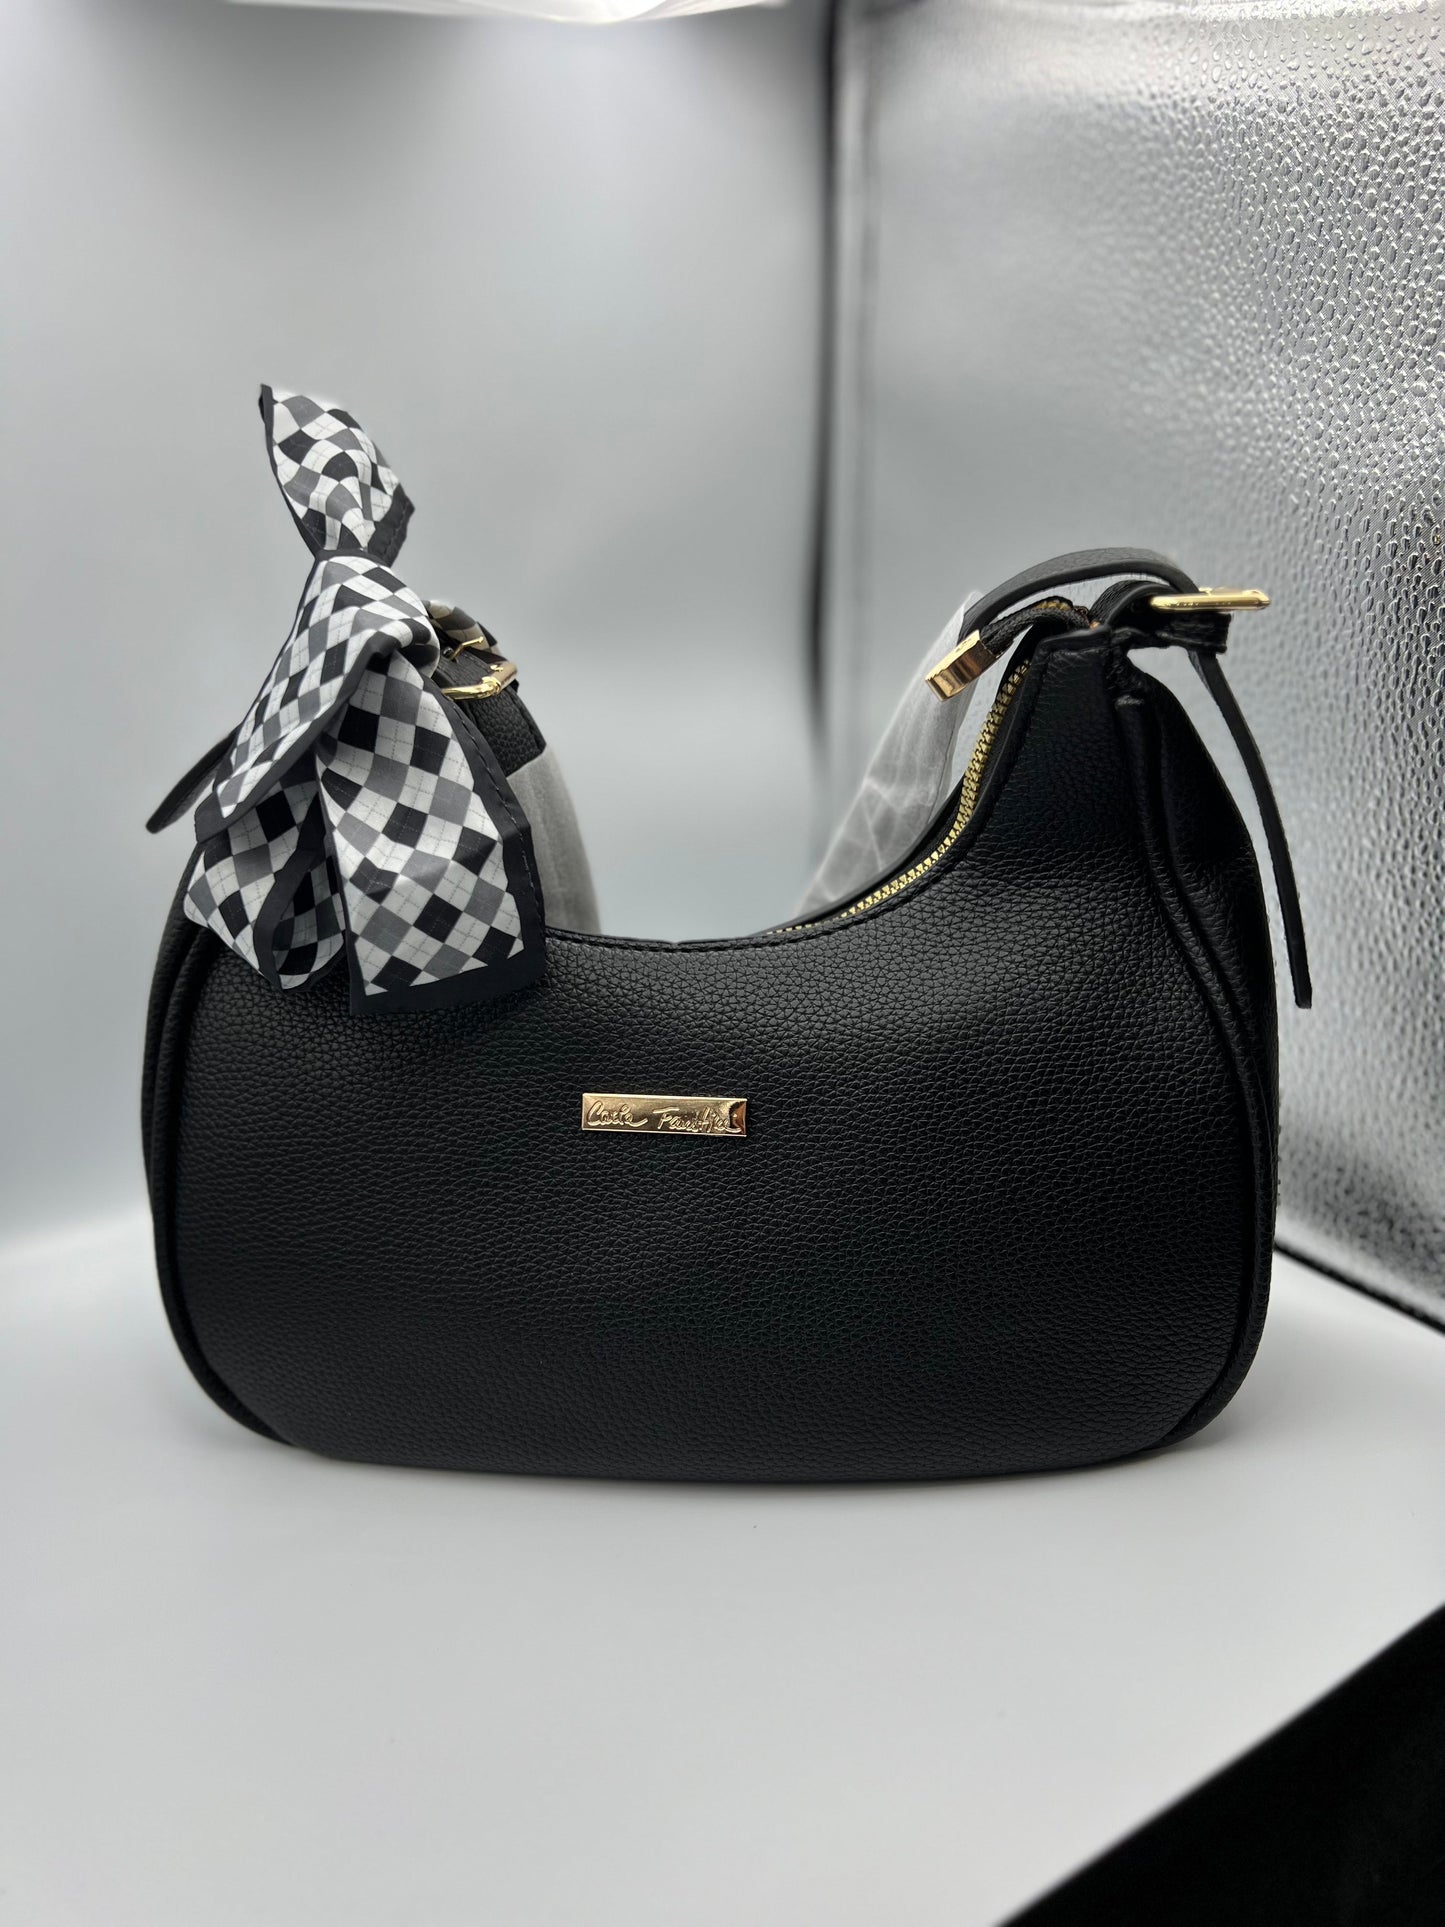 "Luxury Handbags